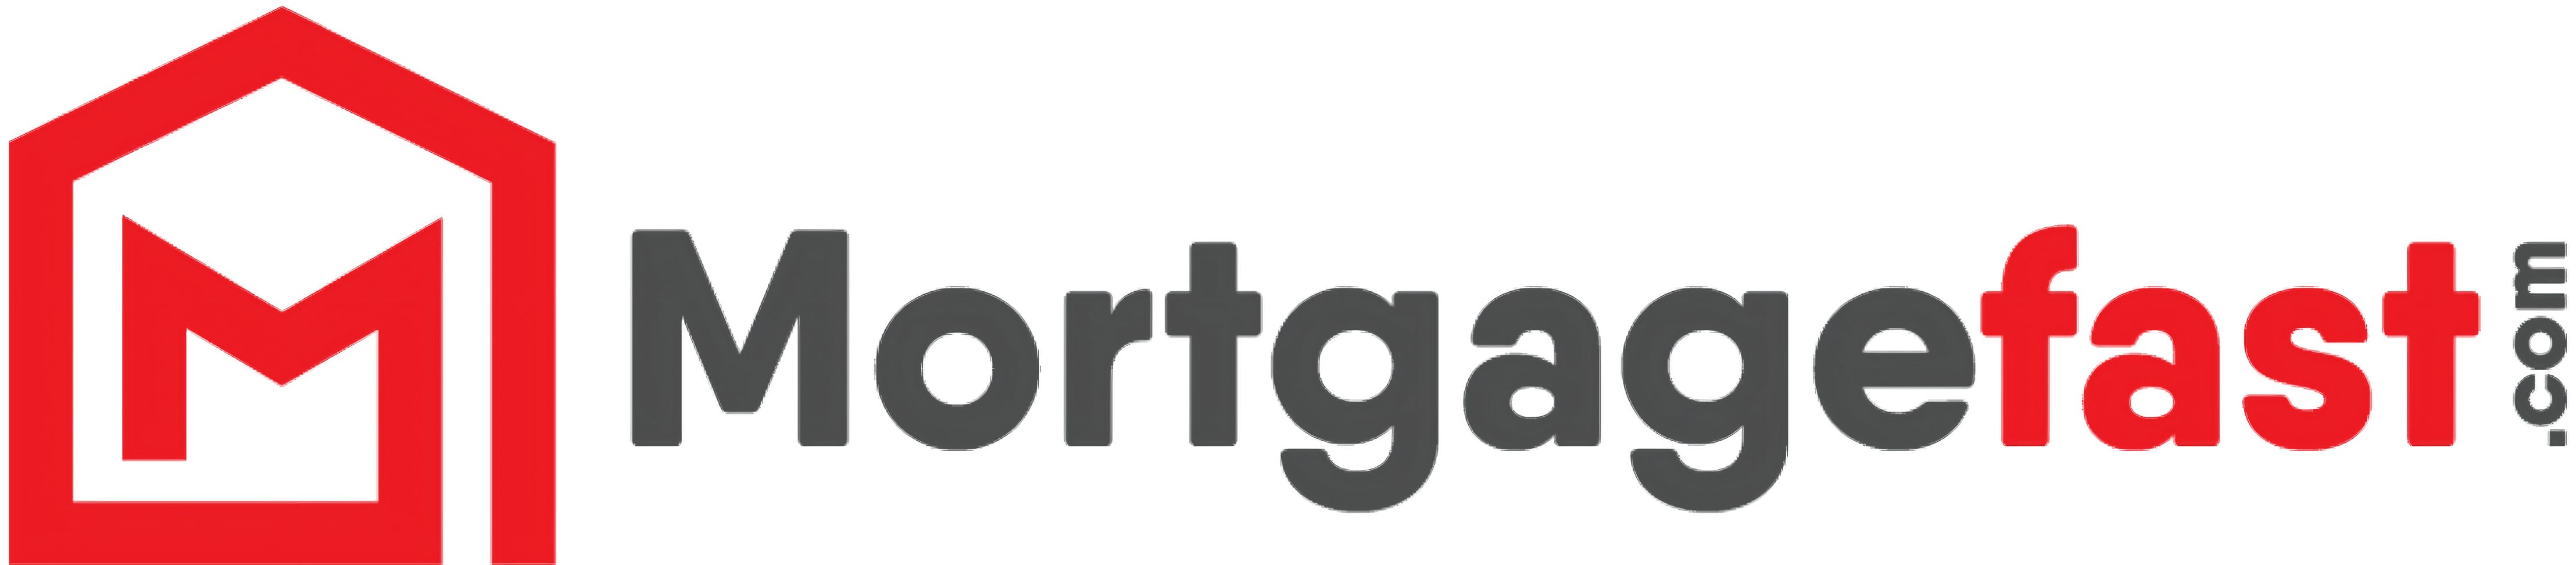 Mortgage fast logo